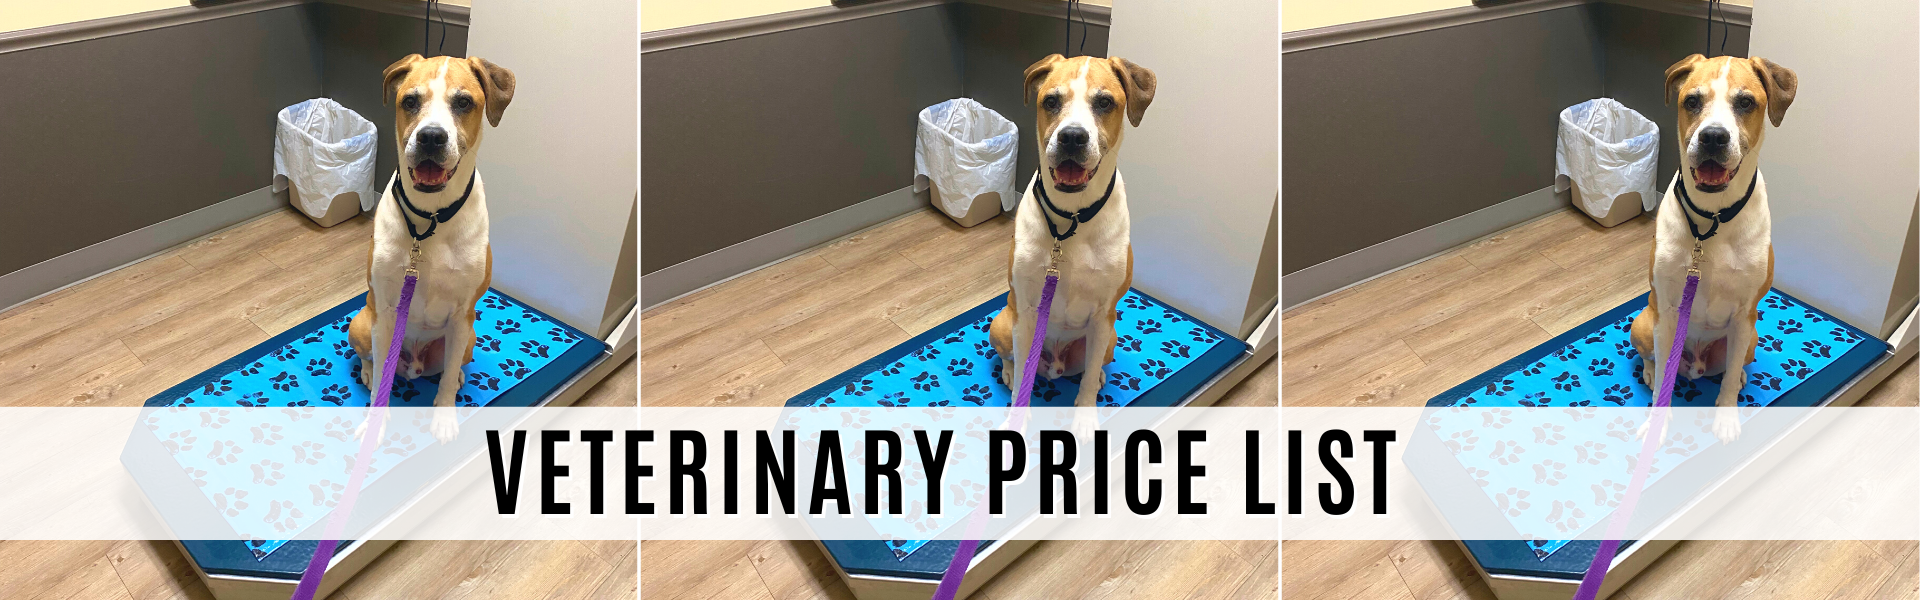 Veterinary Price List  